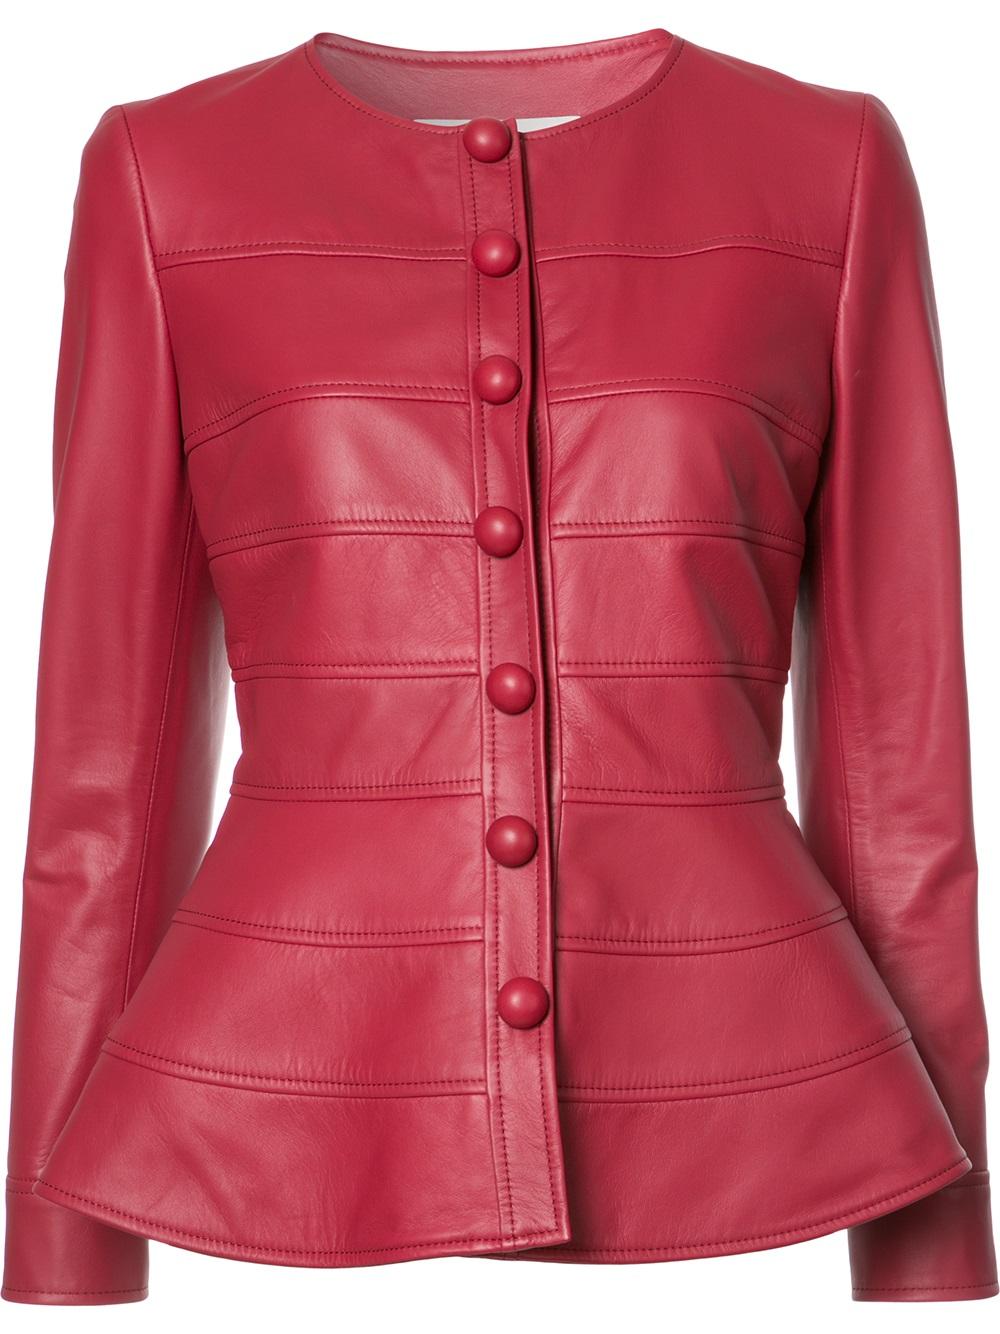 Carolina Herrera red leather peplum jacket